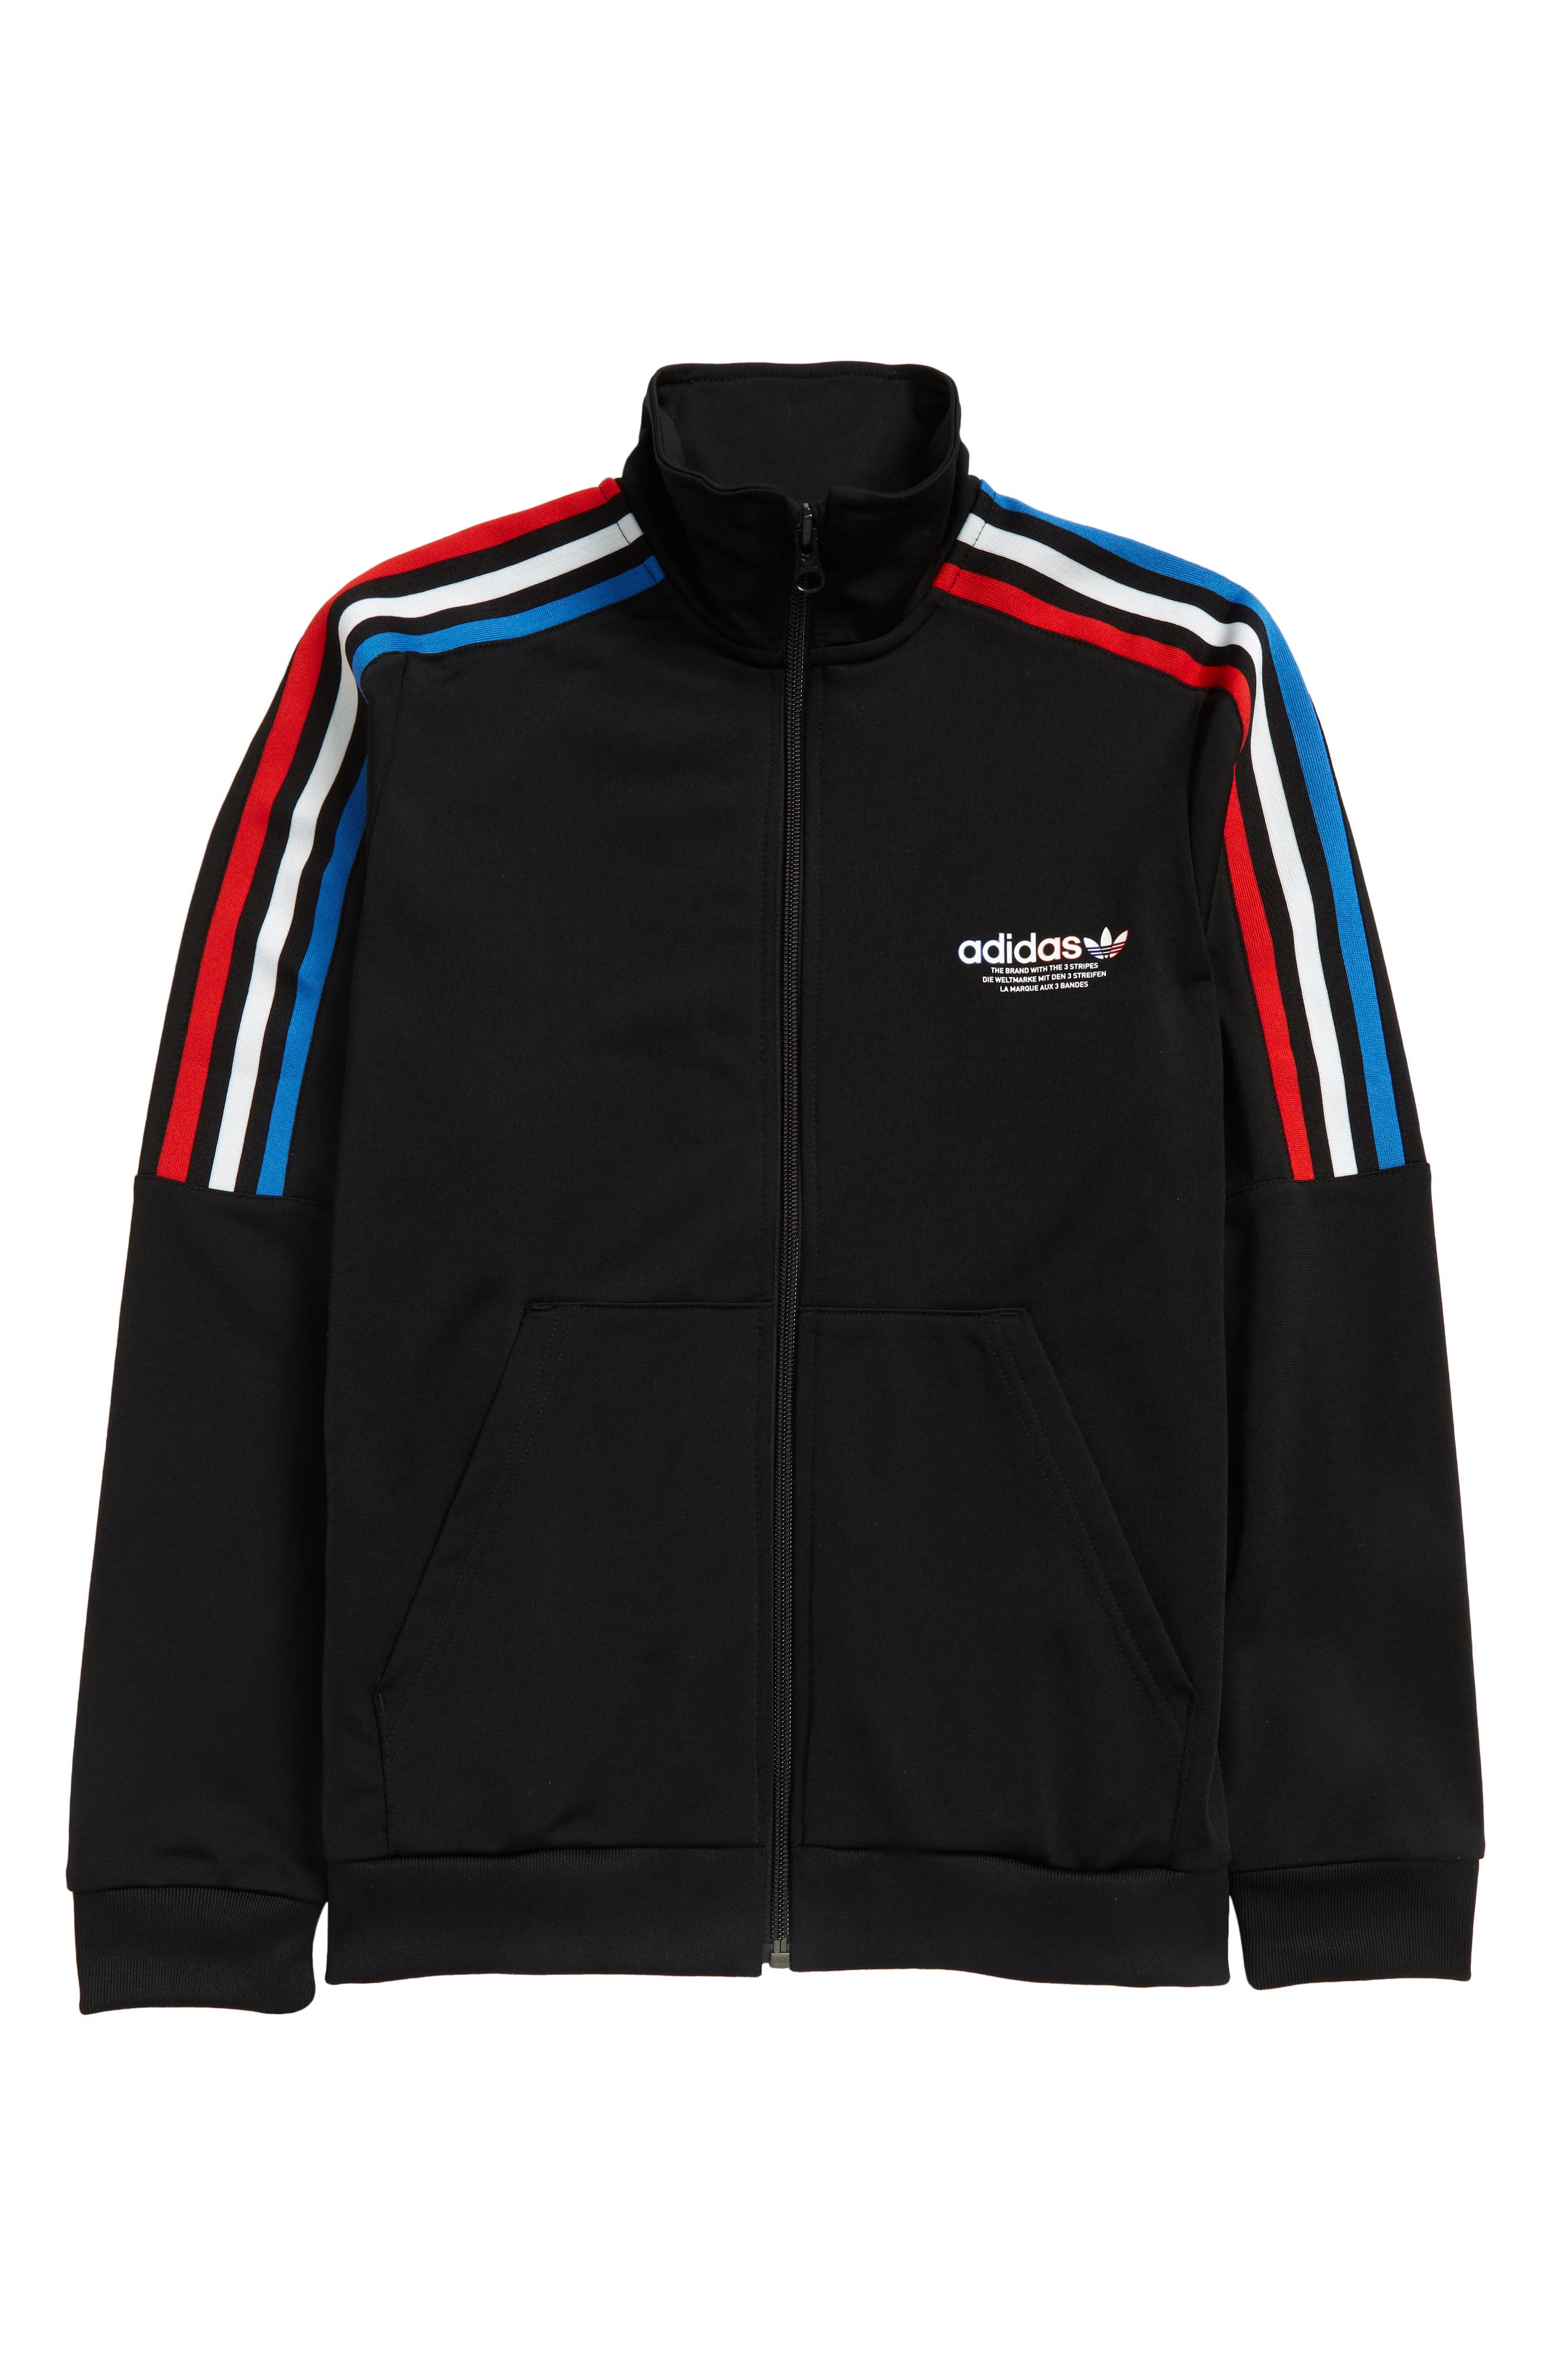 adidas track jacket | Nordstrom